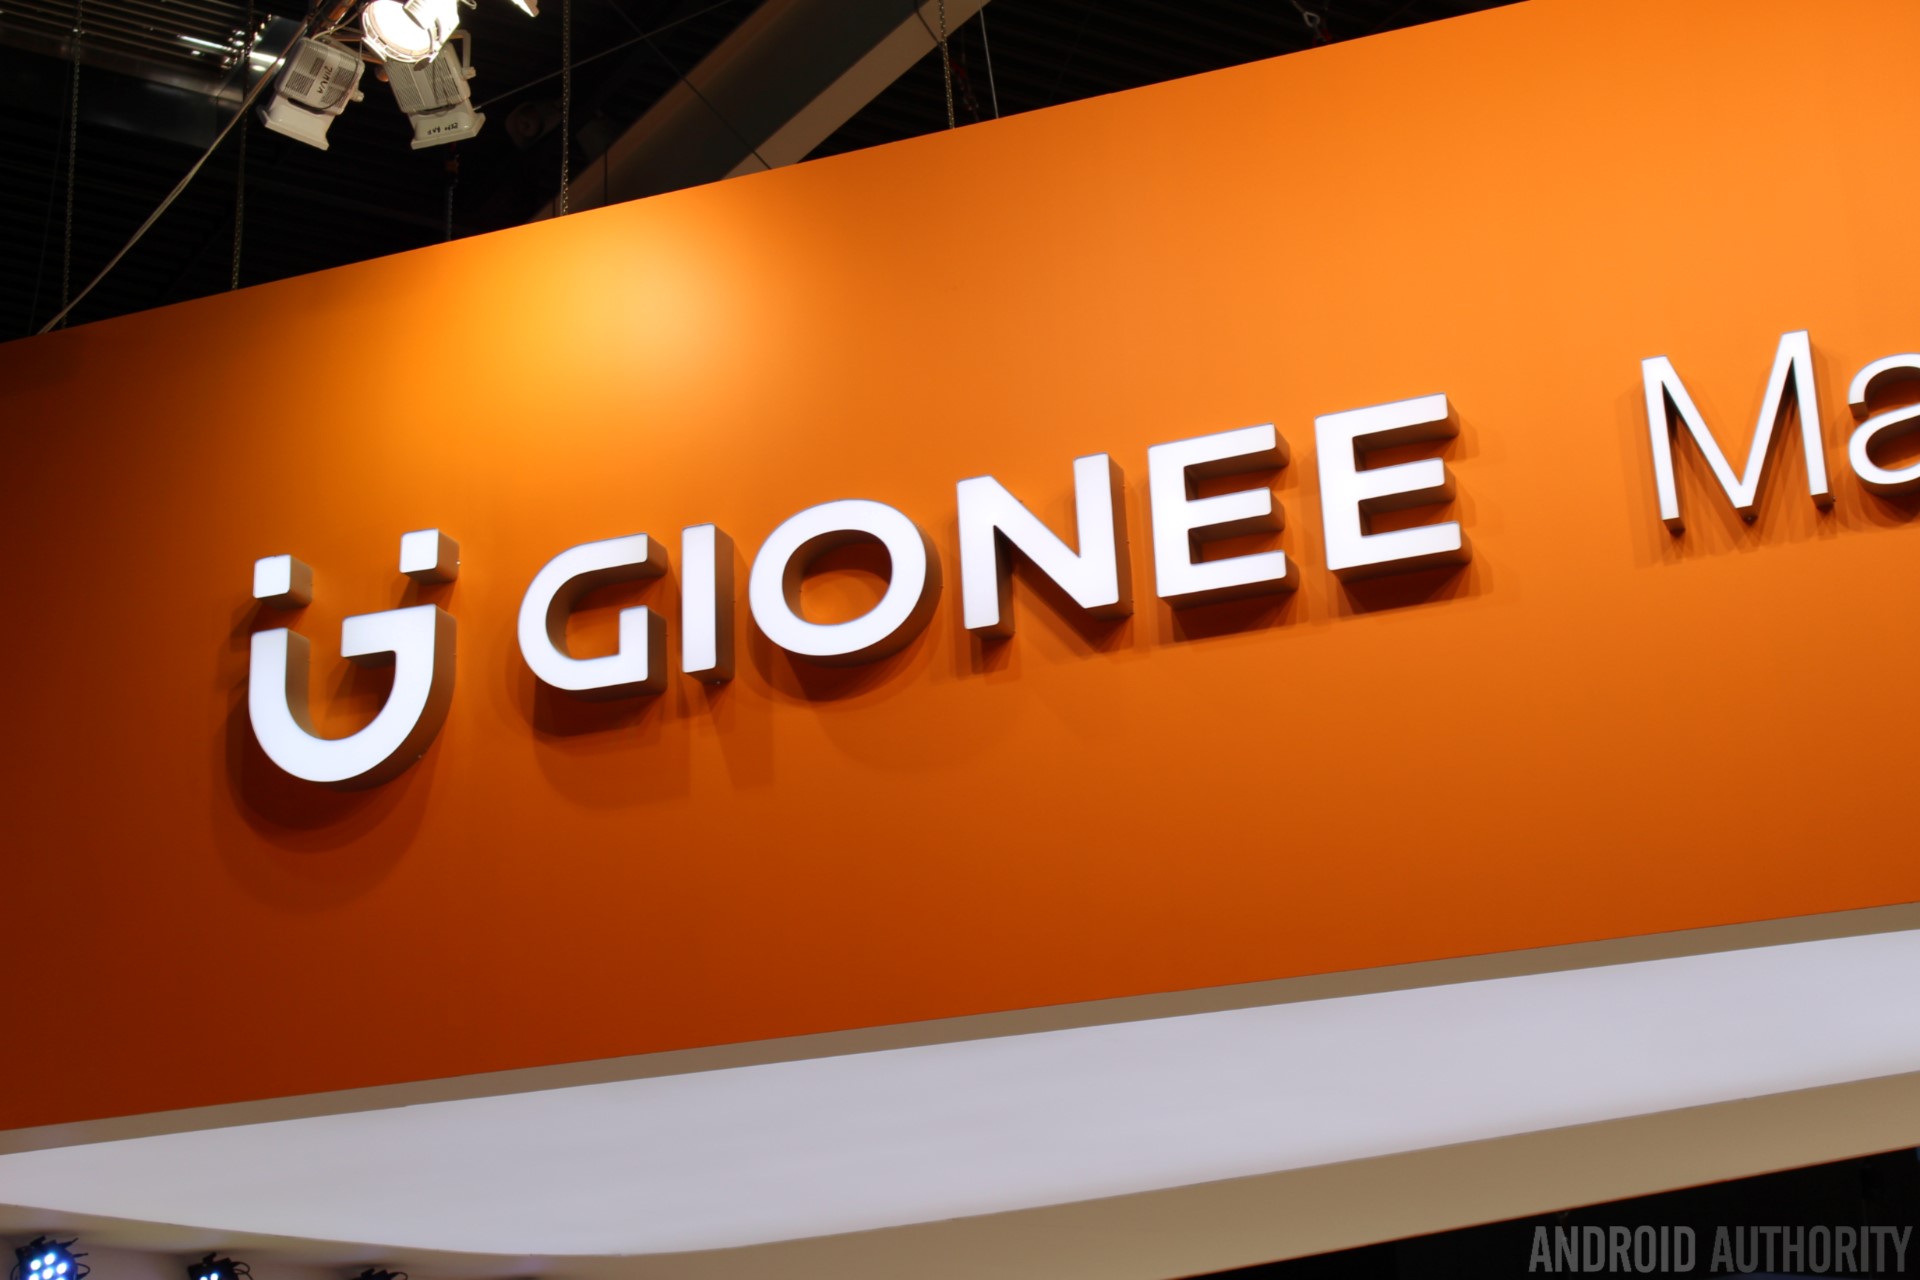 The Gionee logo.